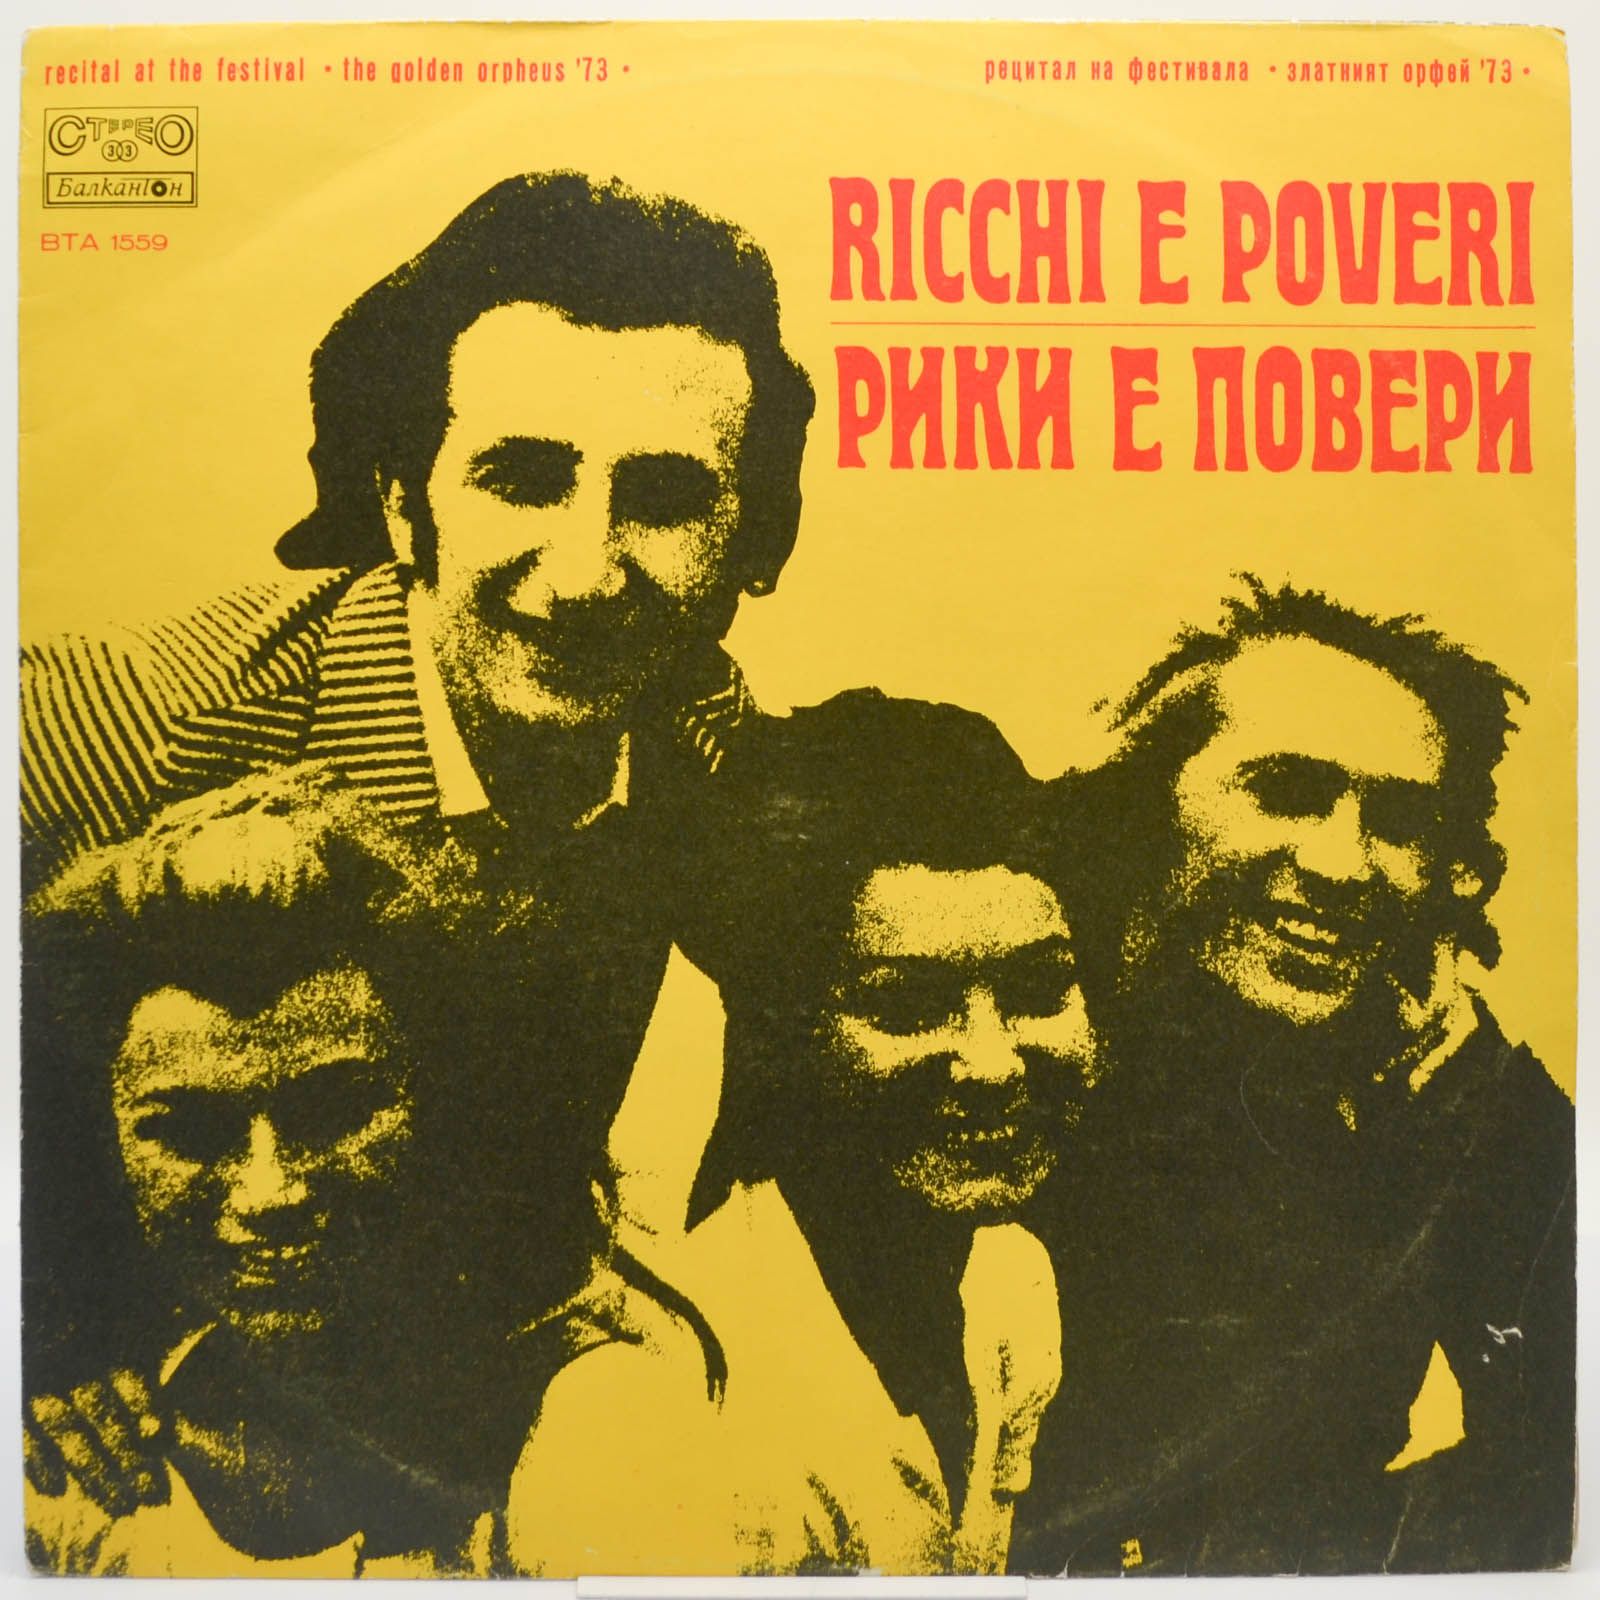 Ricchi E Poveri / Mac & Katie Kissoon — Recital At The Festival "The Golden Orpheus '73", 1973